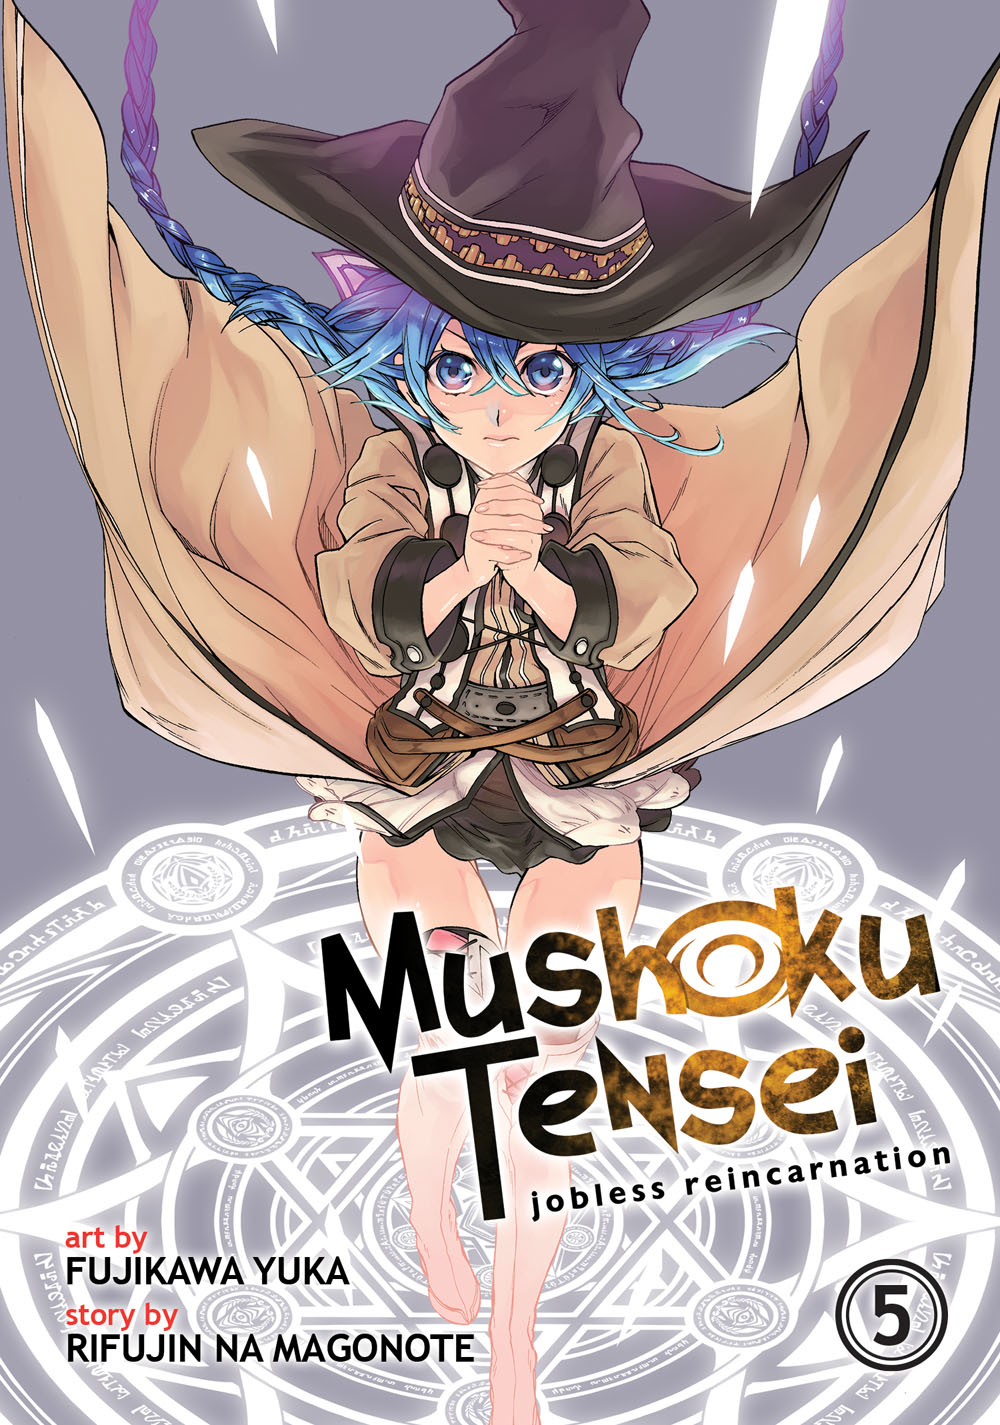 Mangá Online / Mushoku Tensei 56-5 - Anime X Novel